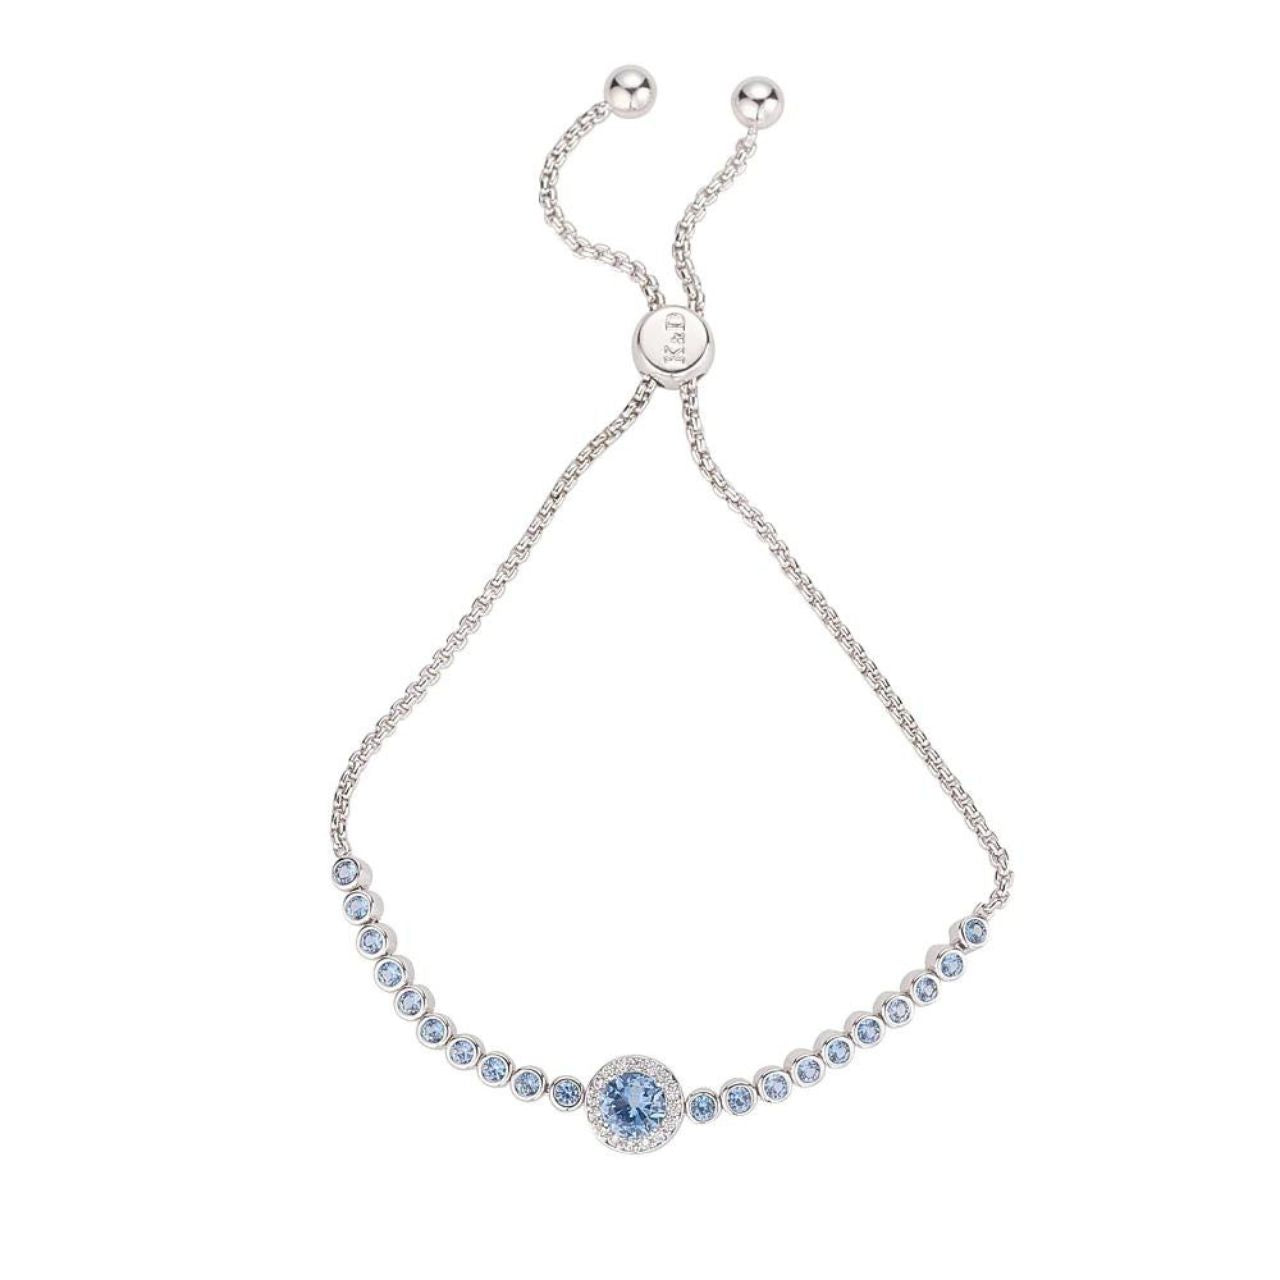 Blue Rhodium Bracelet by Knight & Day  Classic style bracelet embellished with light blue CZ stones. Slider fastening. Rhodium plating.